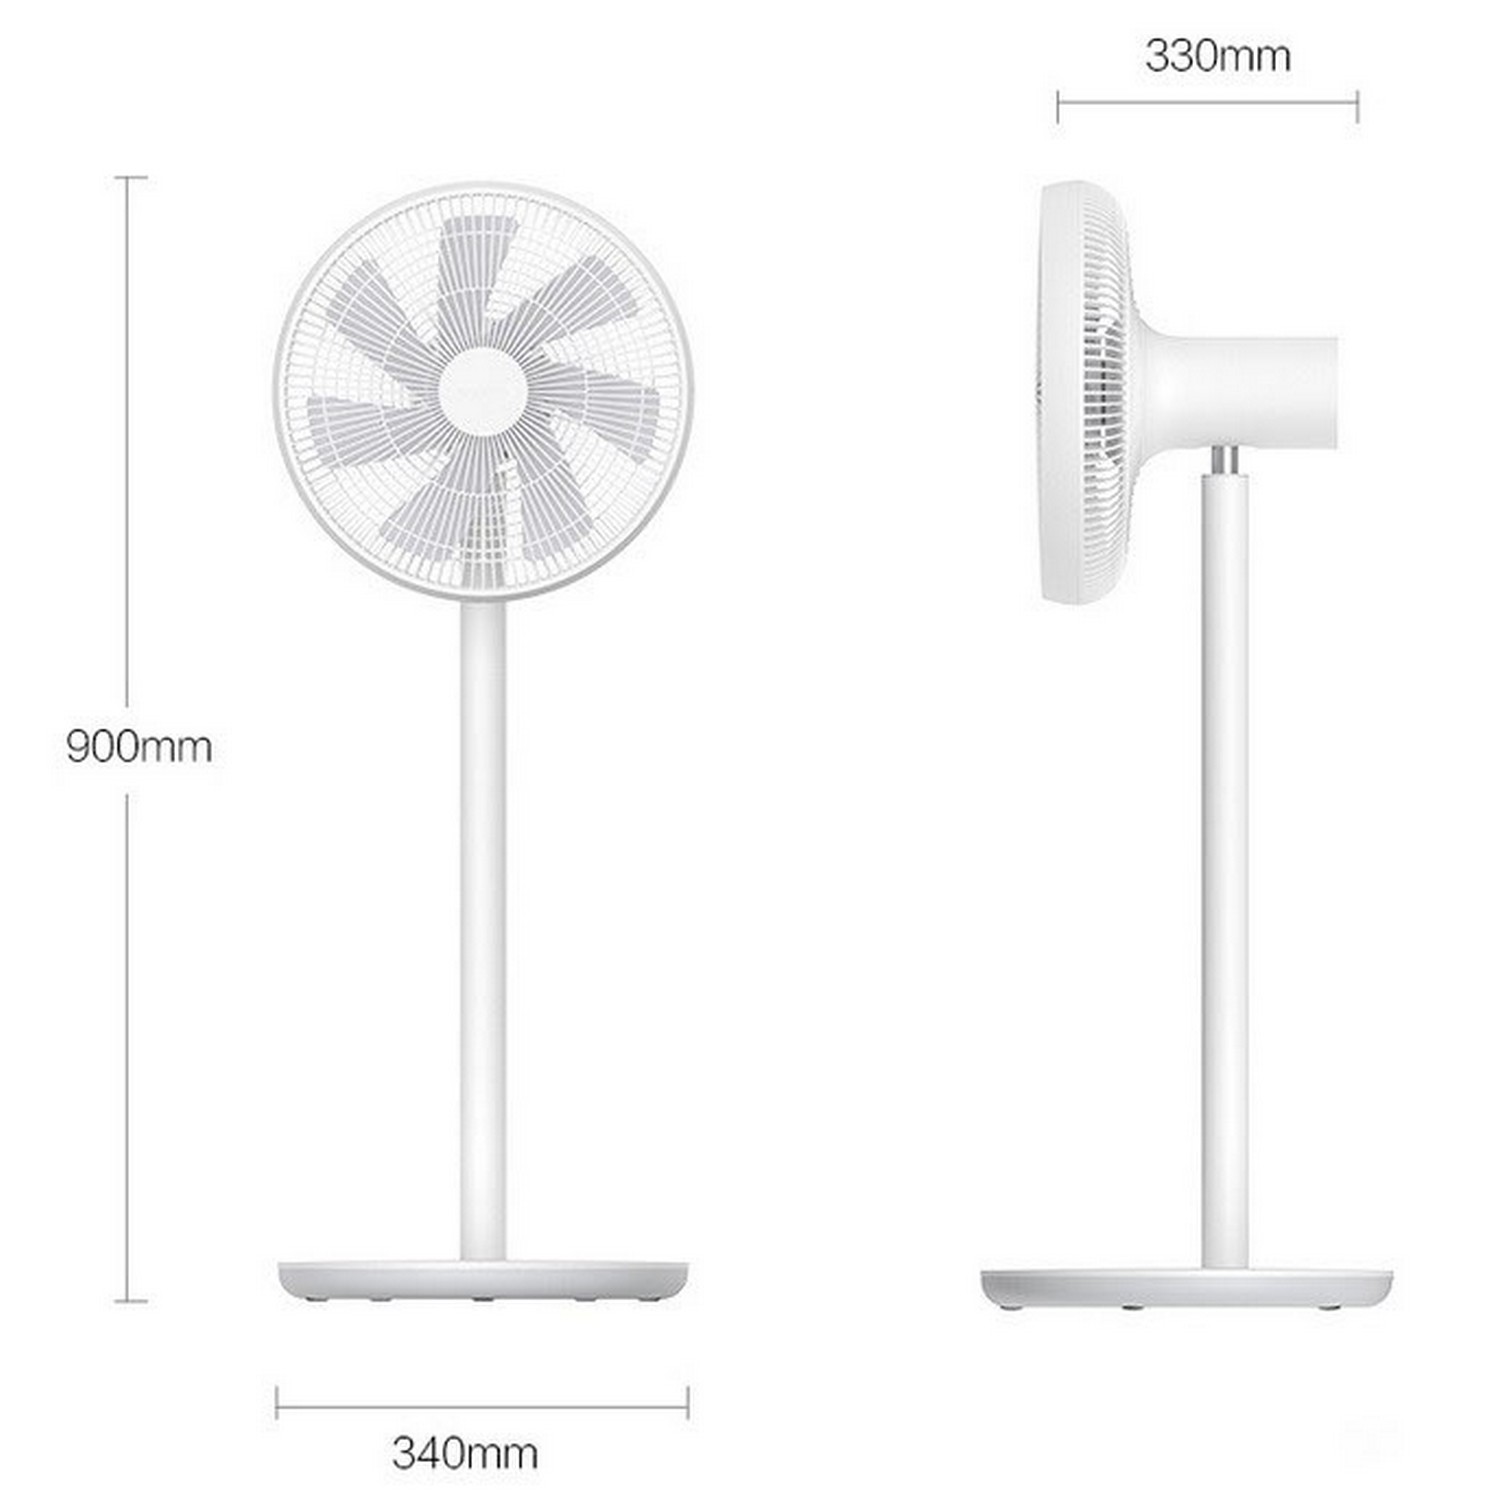 Напольный вентилятор Xiaomi SmartMi ZhiMi DC Electric Fan White ZRFFS01ZM цена 2799.00 грн - фотография 2